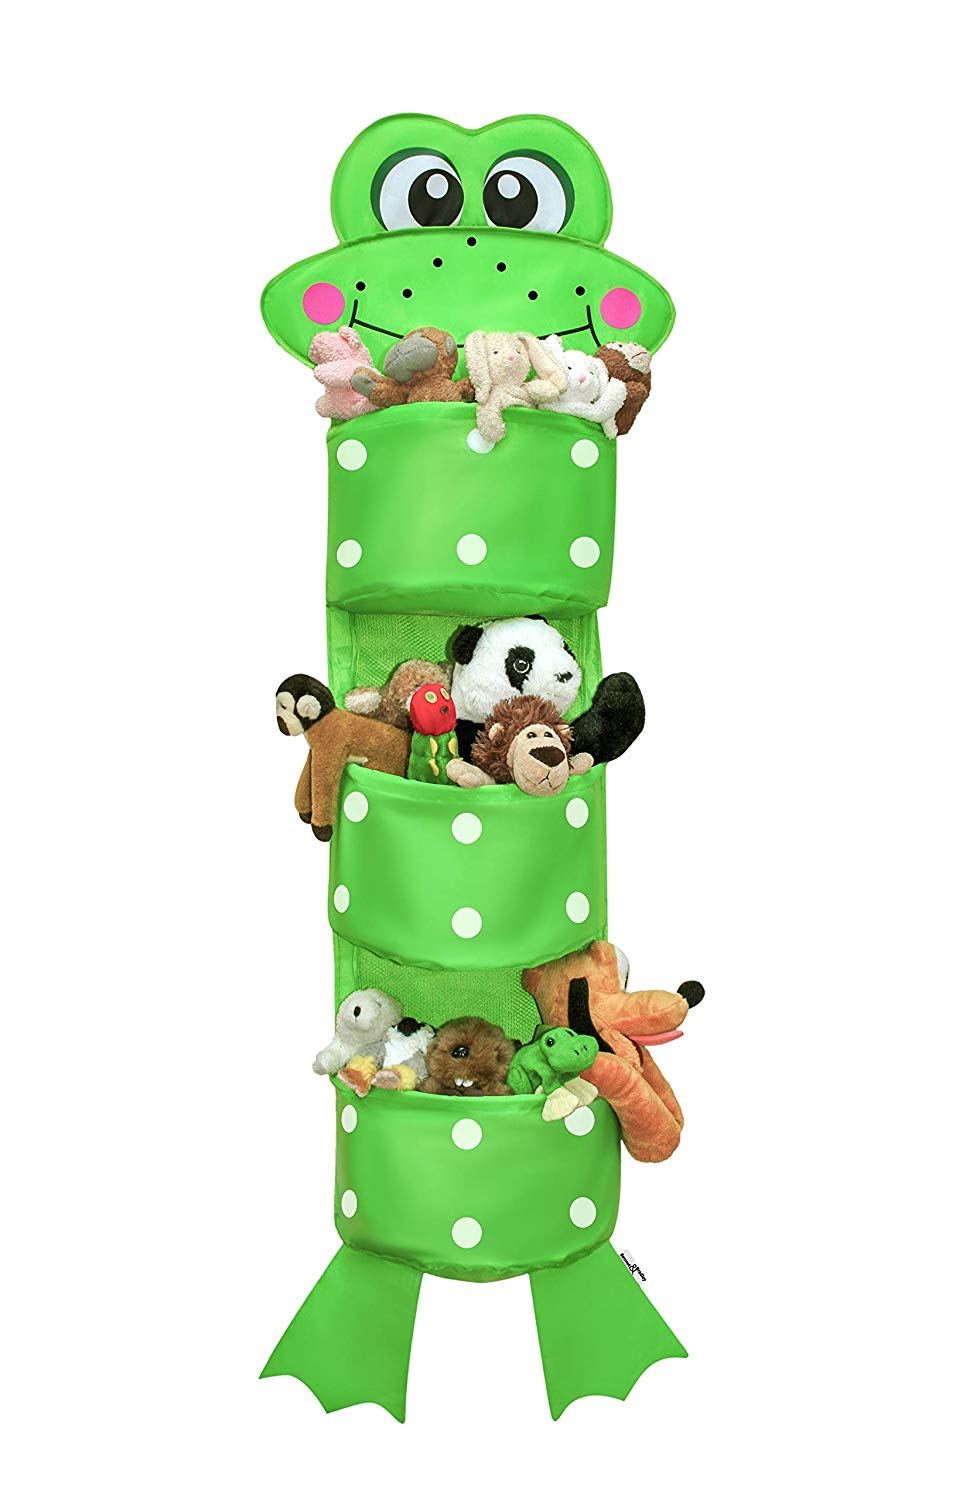 Hanging Toy Storage | SALE-45%| Kids Hanging Toy Storage |Closet Organizer for Baby Clothes, Stuffed Animal Storage. Perfect Gift | 100% Guarantee | Includes Bonus & Luxury Gift Box